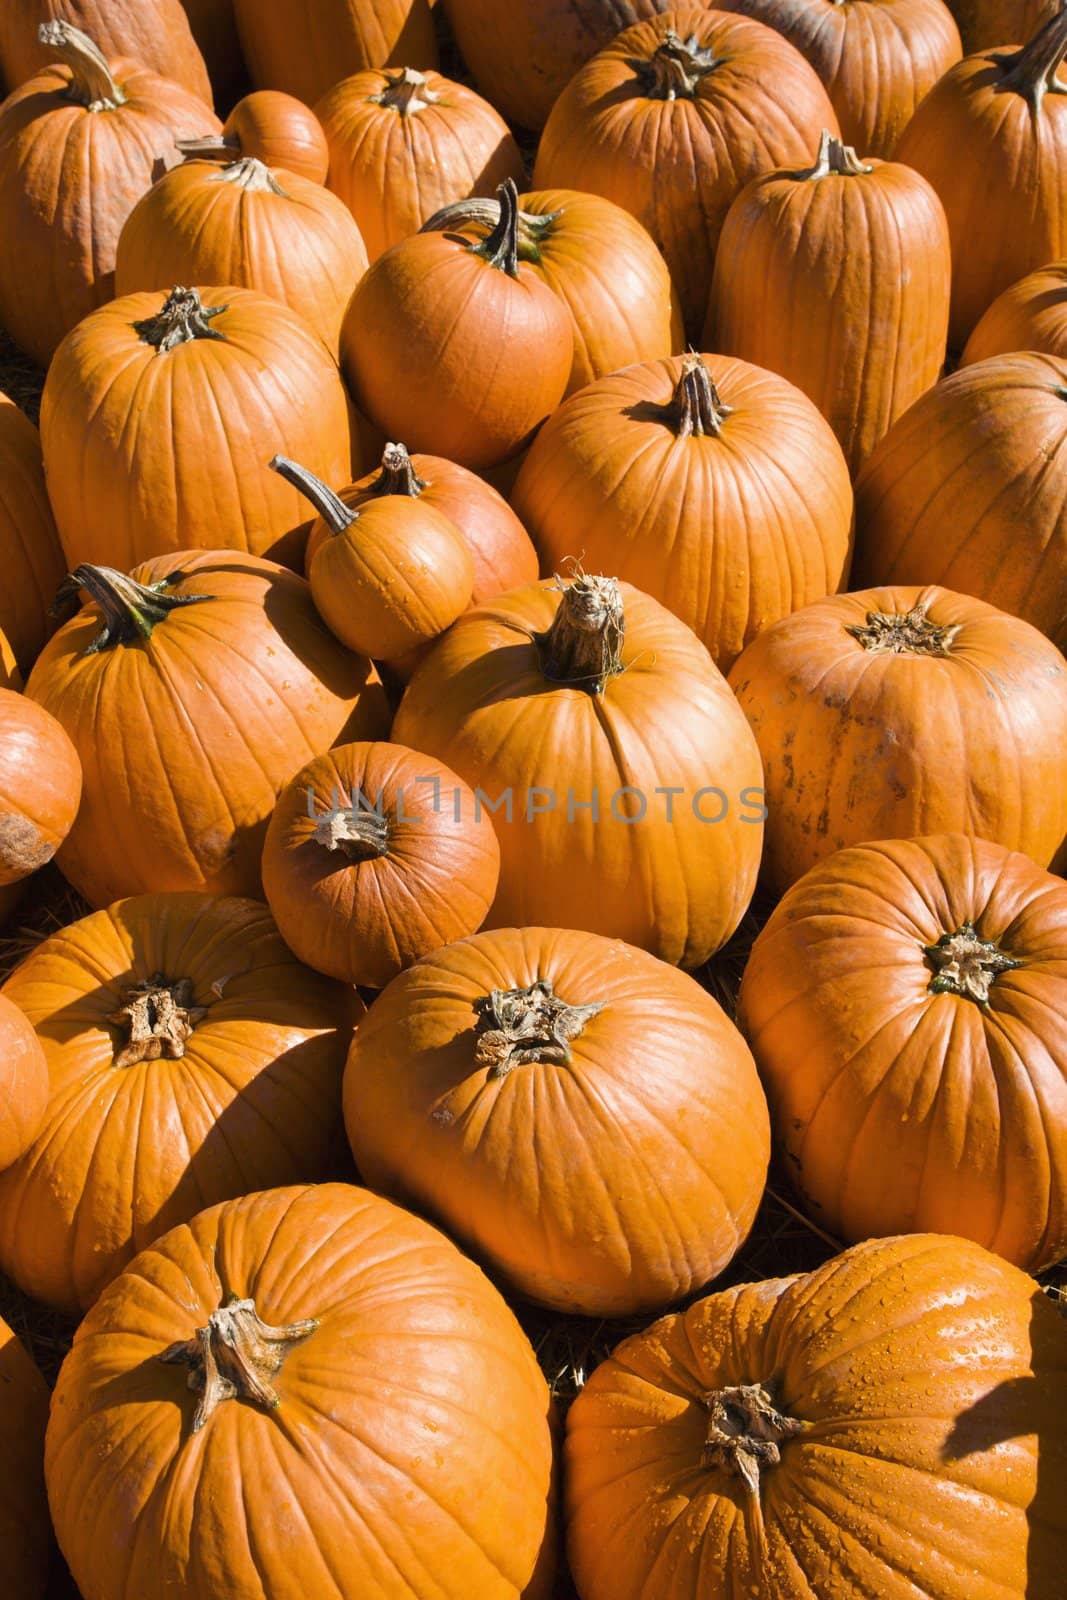 Pile of Fall pumpkins at outdoor market.